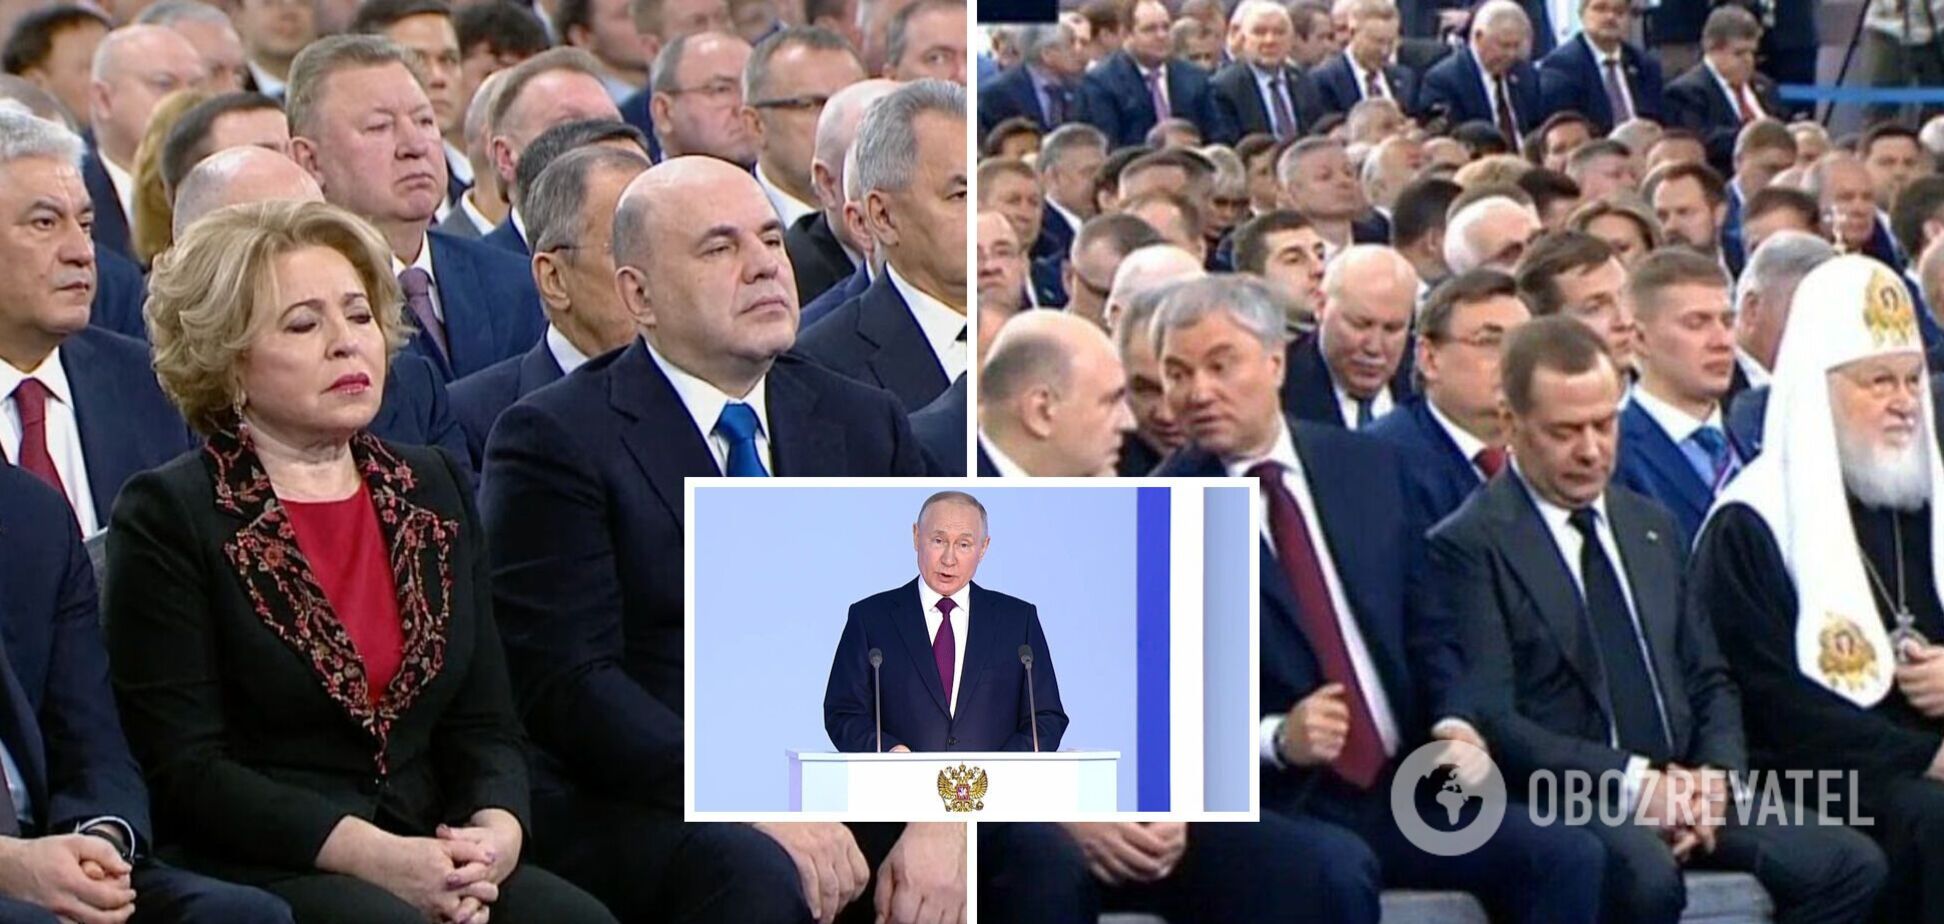 'ChatGPT справился бы гораздо лучше': в сети высмеяли страшилки от Путина и подметили нюанс с Медведевым и Матвиенко. Фото